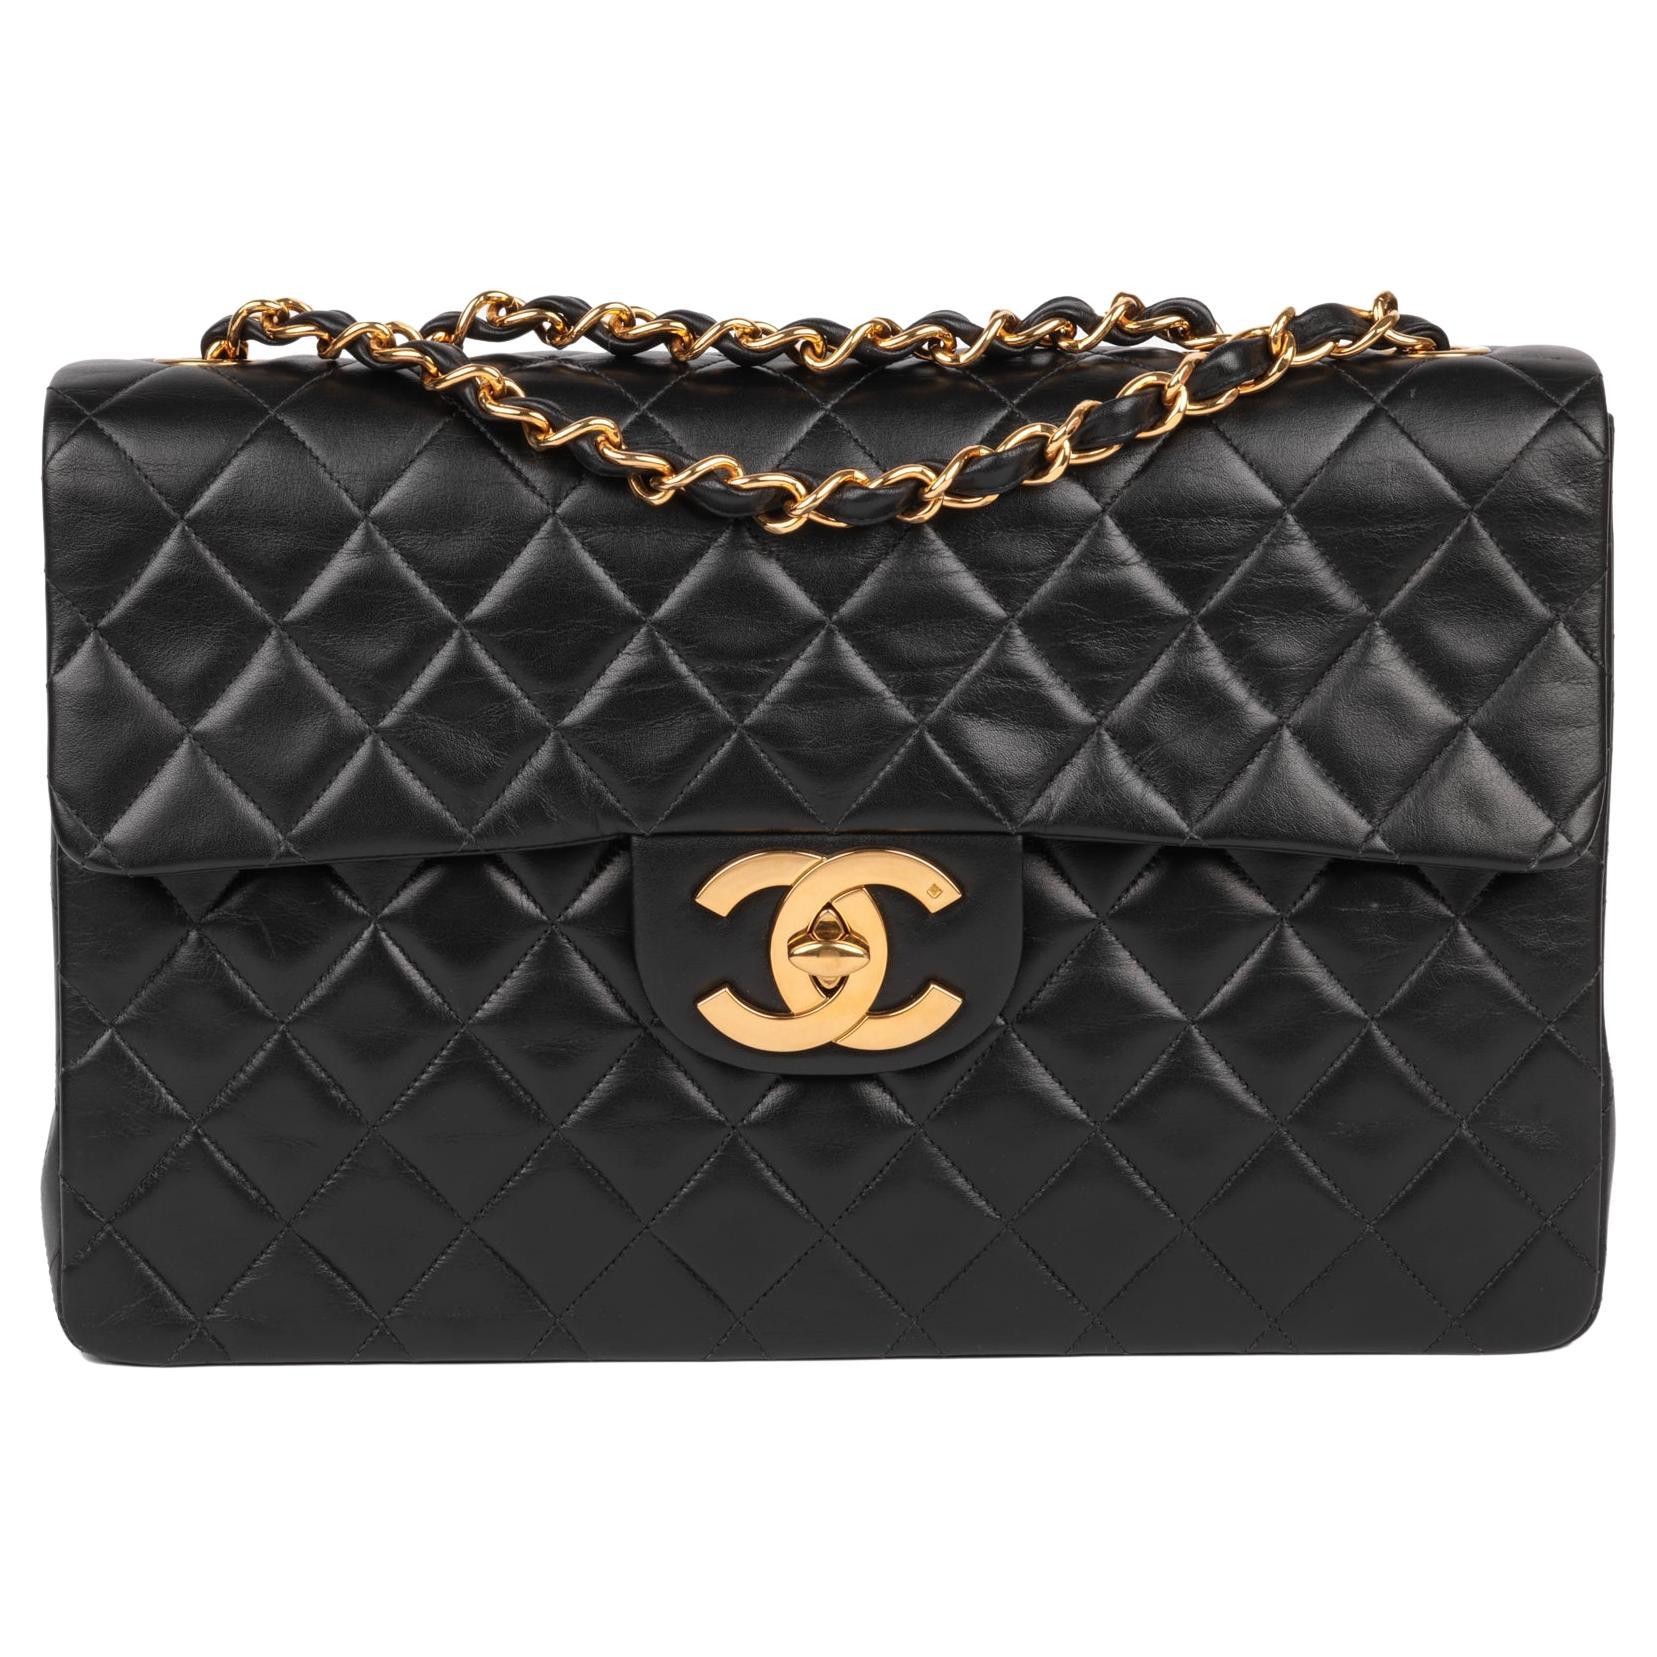 Chanel Classic Jumbo XL Maxi Flap Bag